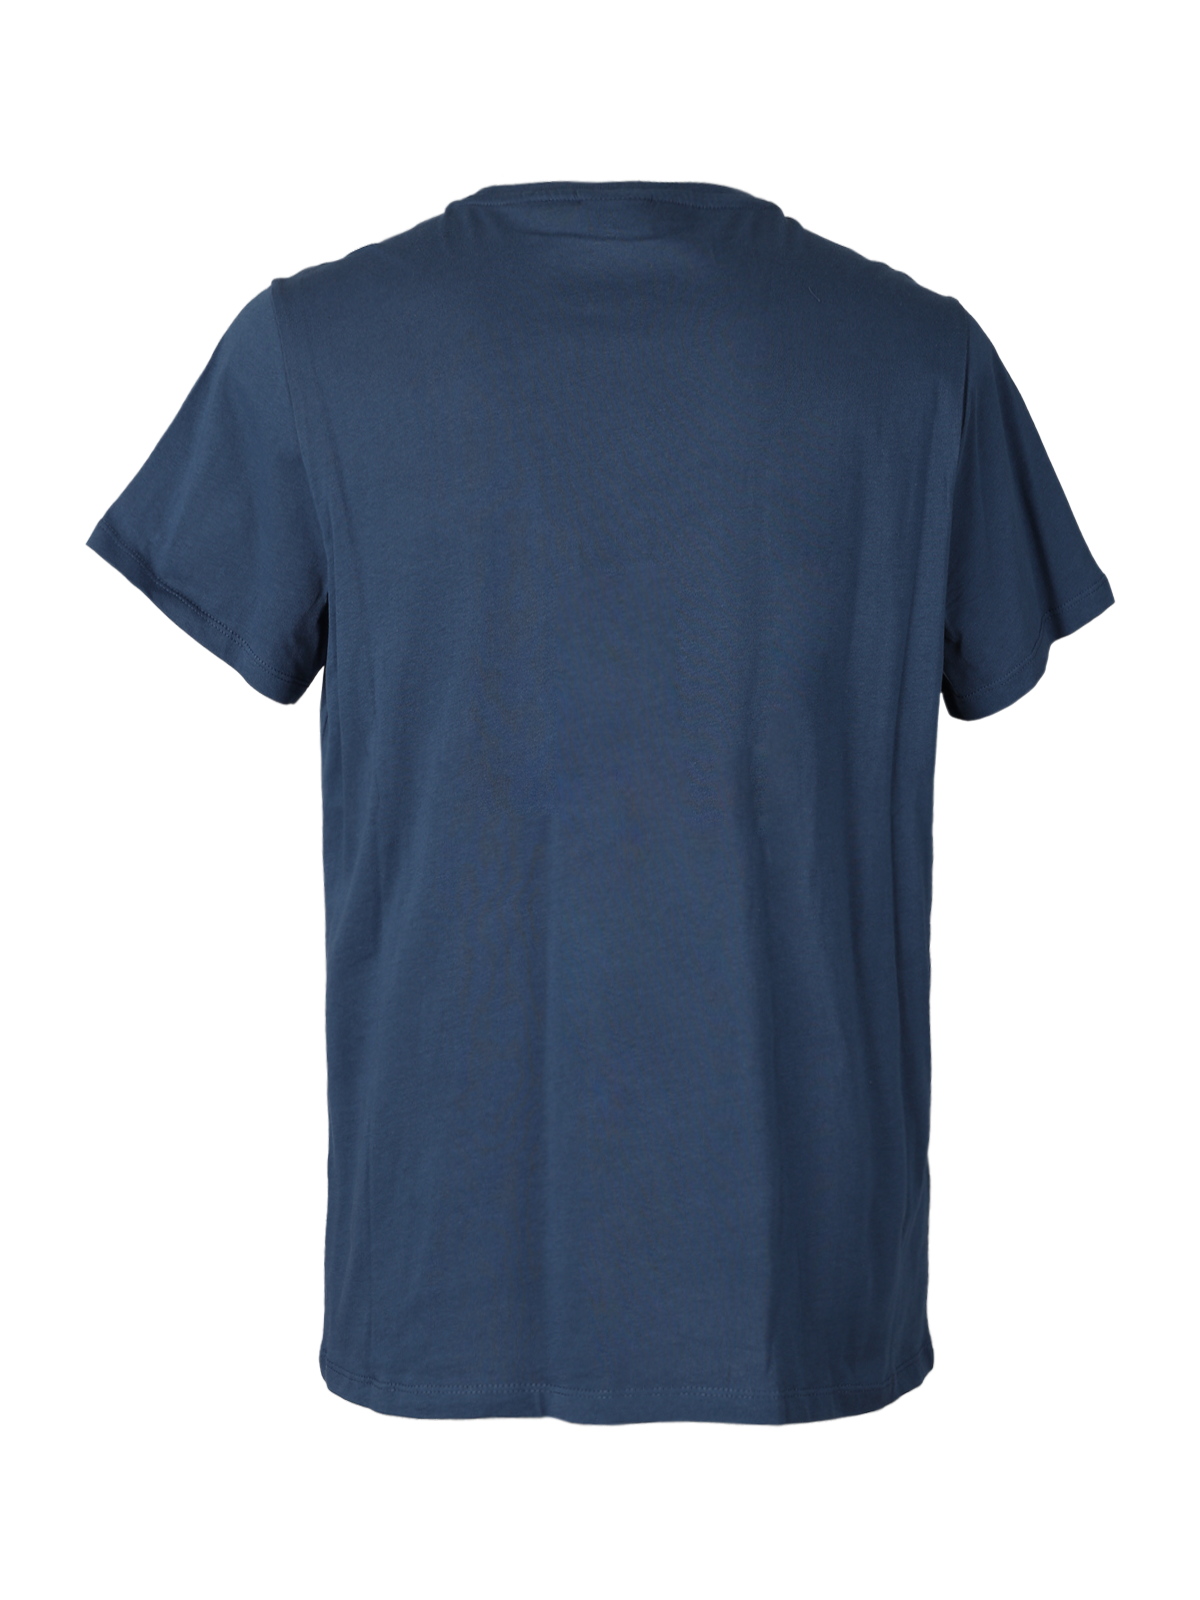 No-Bad-Days Herren T-Shirt | Blau